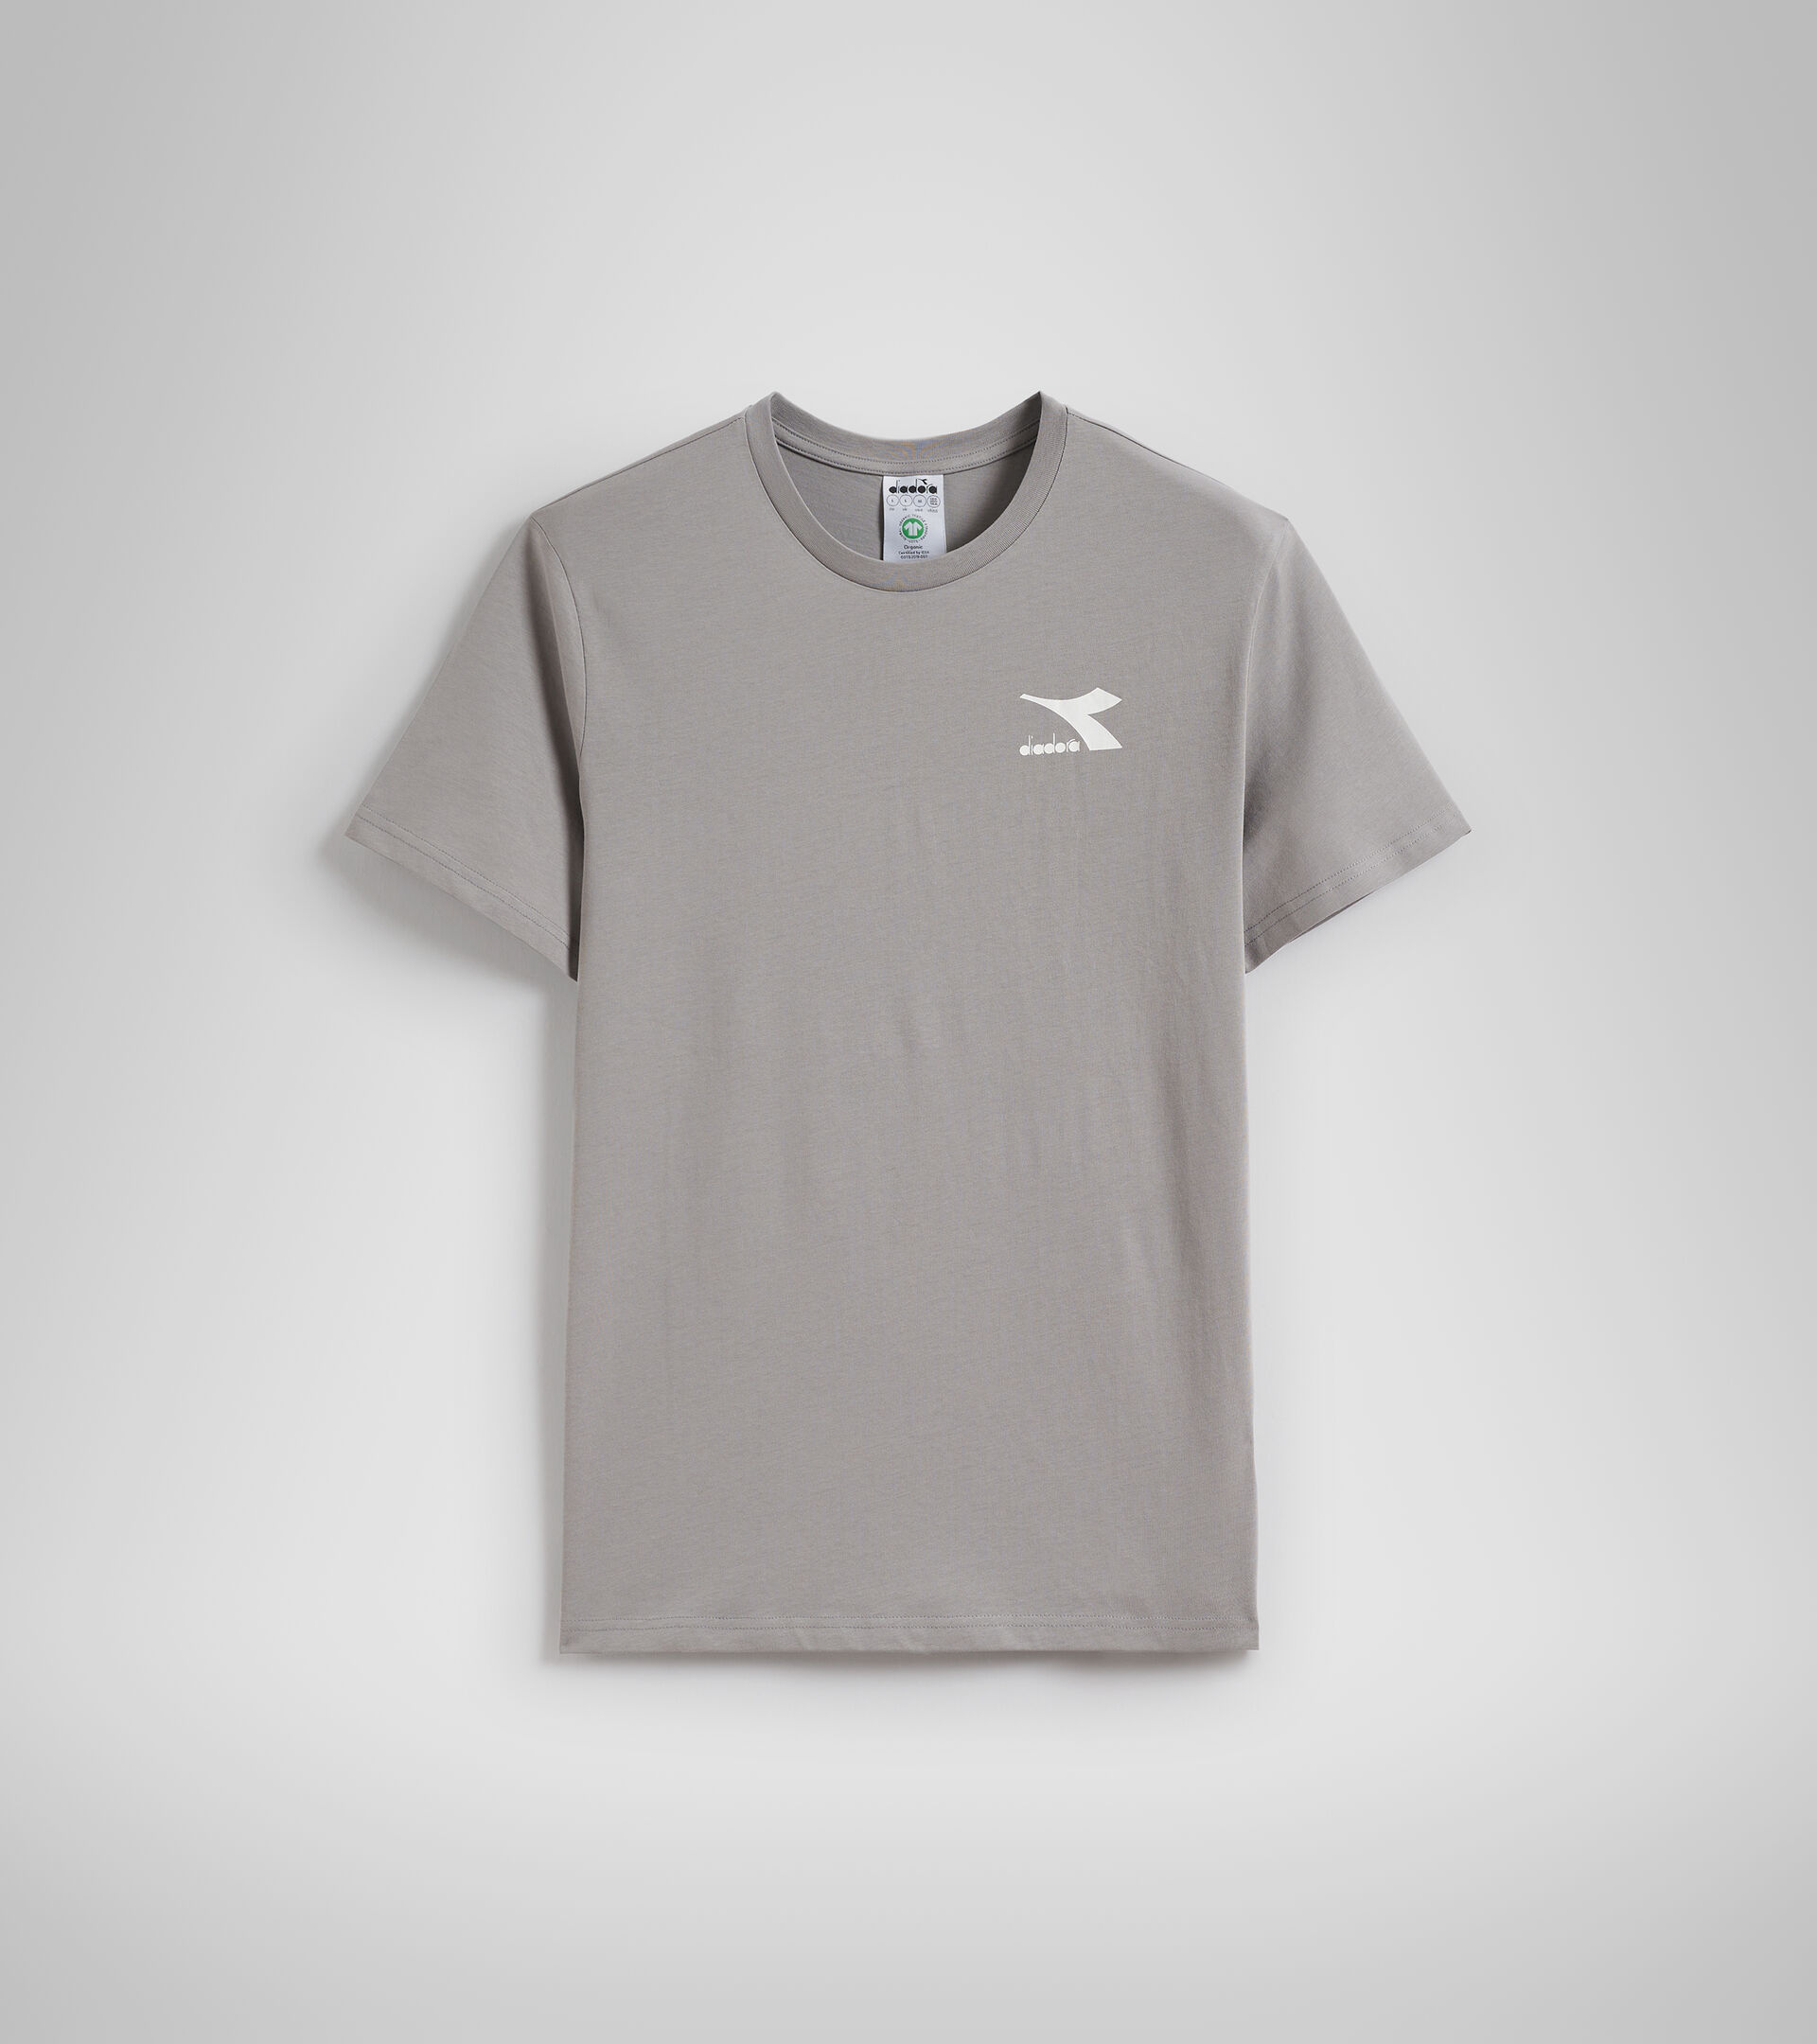 T-shirt - Men T-SHIRT SS CHROMIA GRAY MOUSE - Diadora